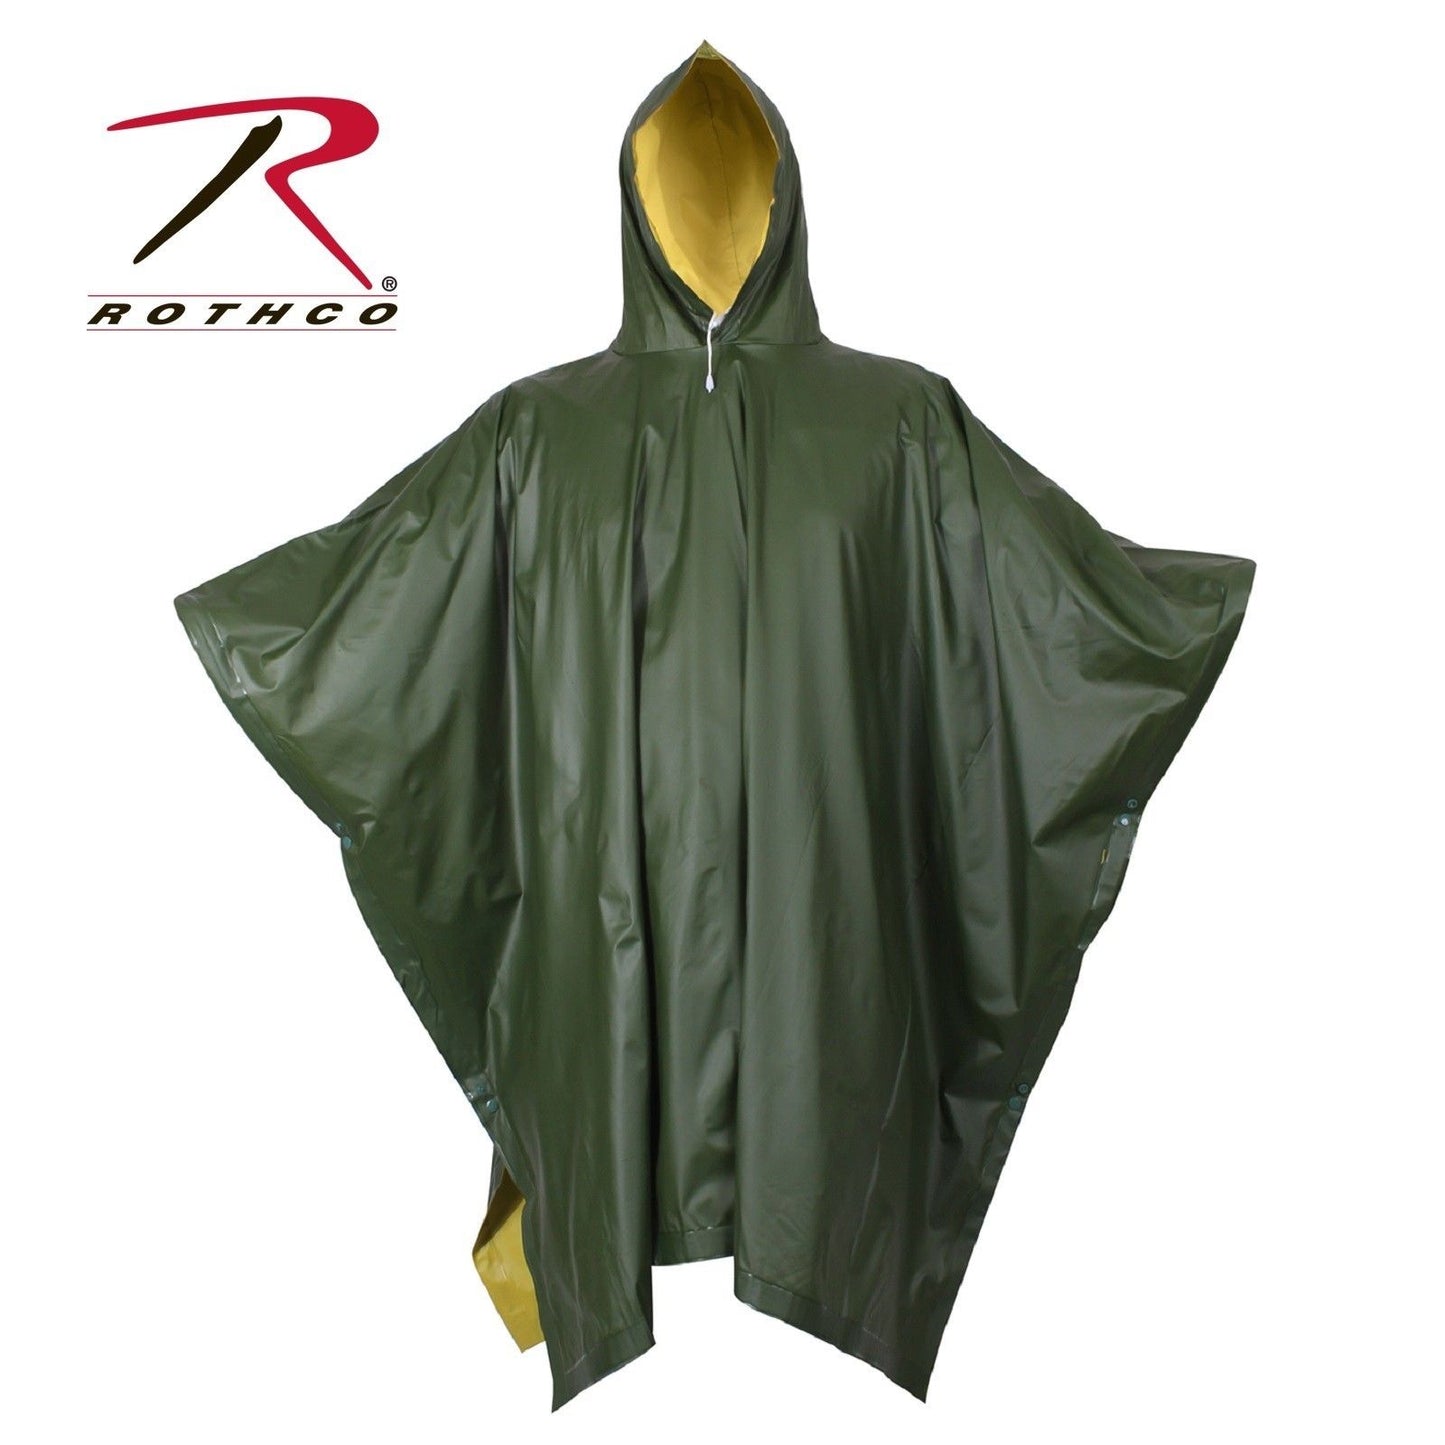 Rothco Reversible Rubberized Poncho - Olive Drab/Yellow Reversible Rain Poncho